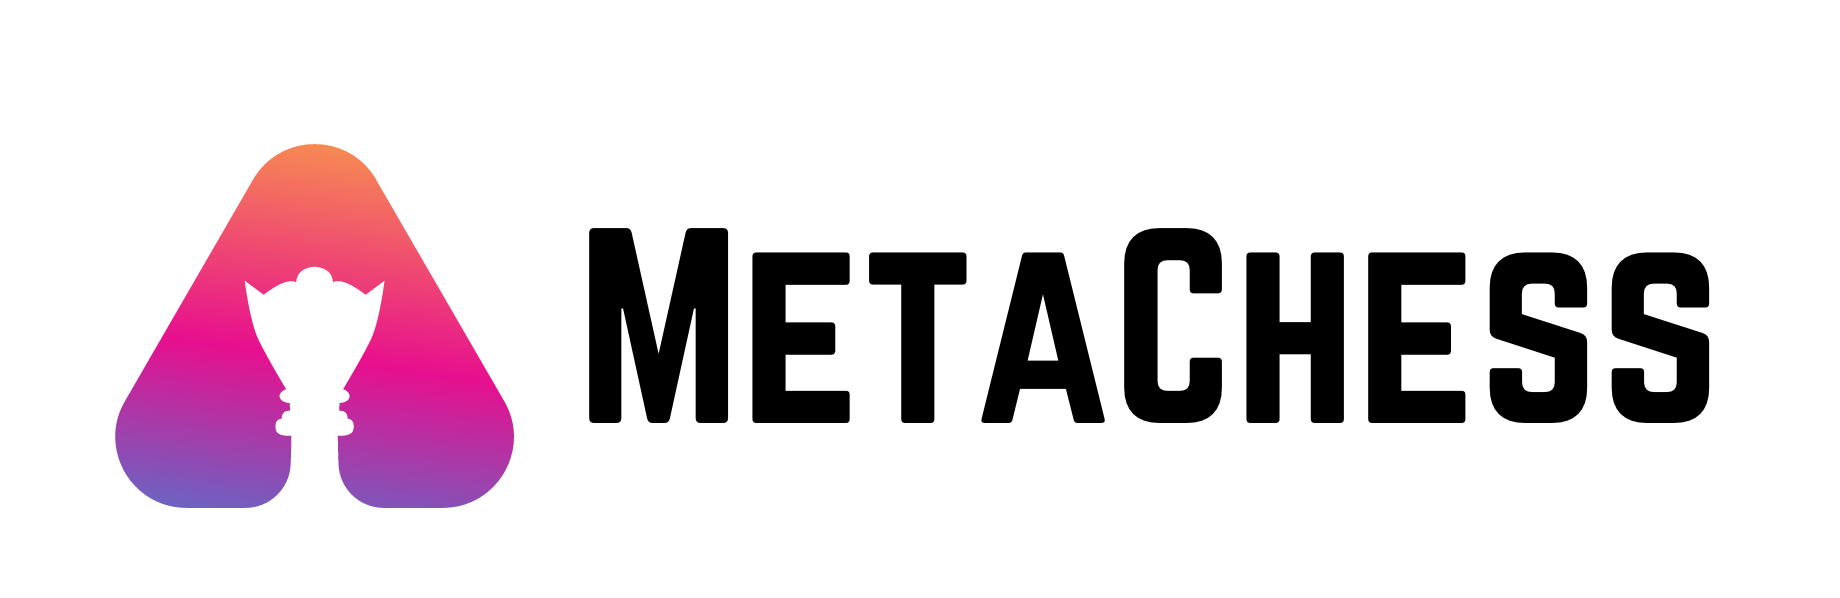 MetaChessTeam showcase